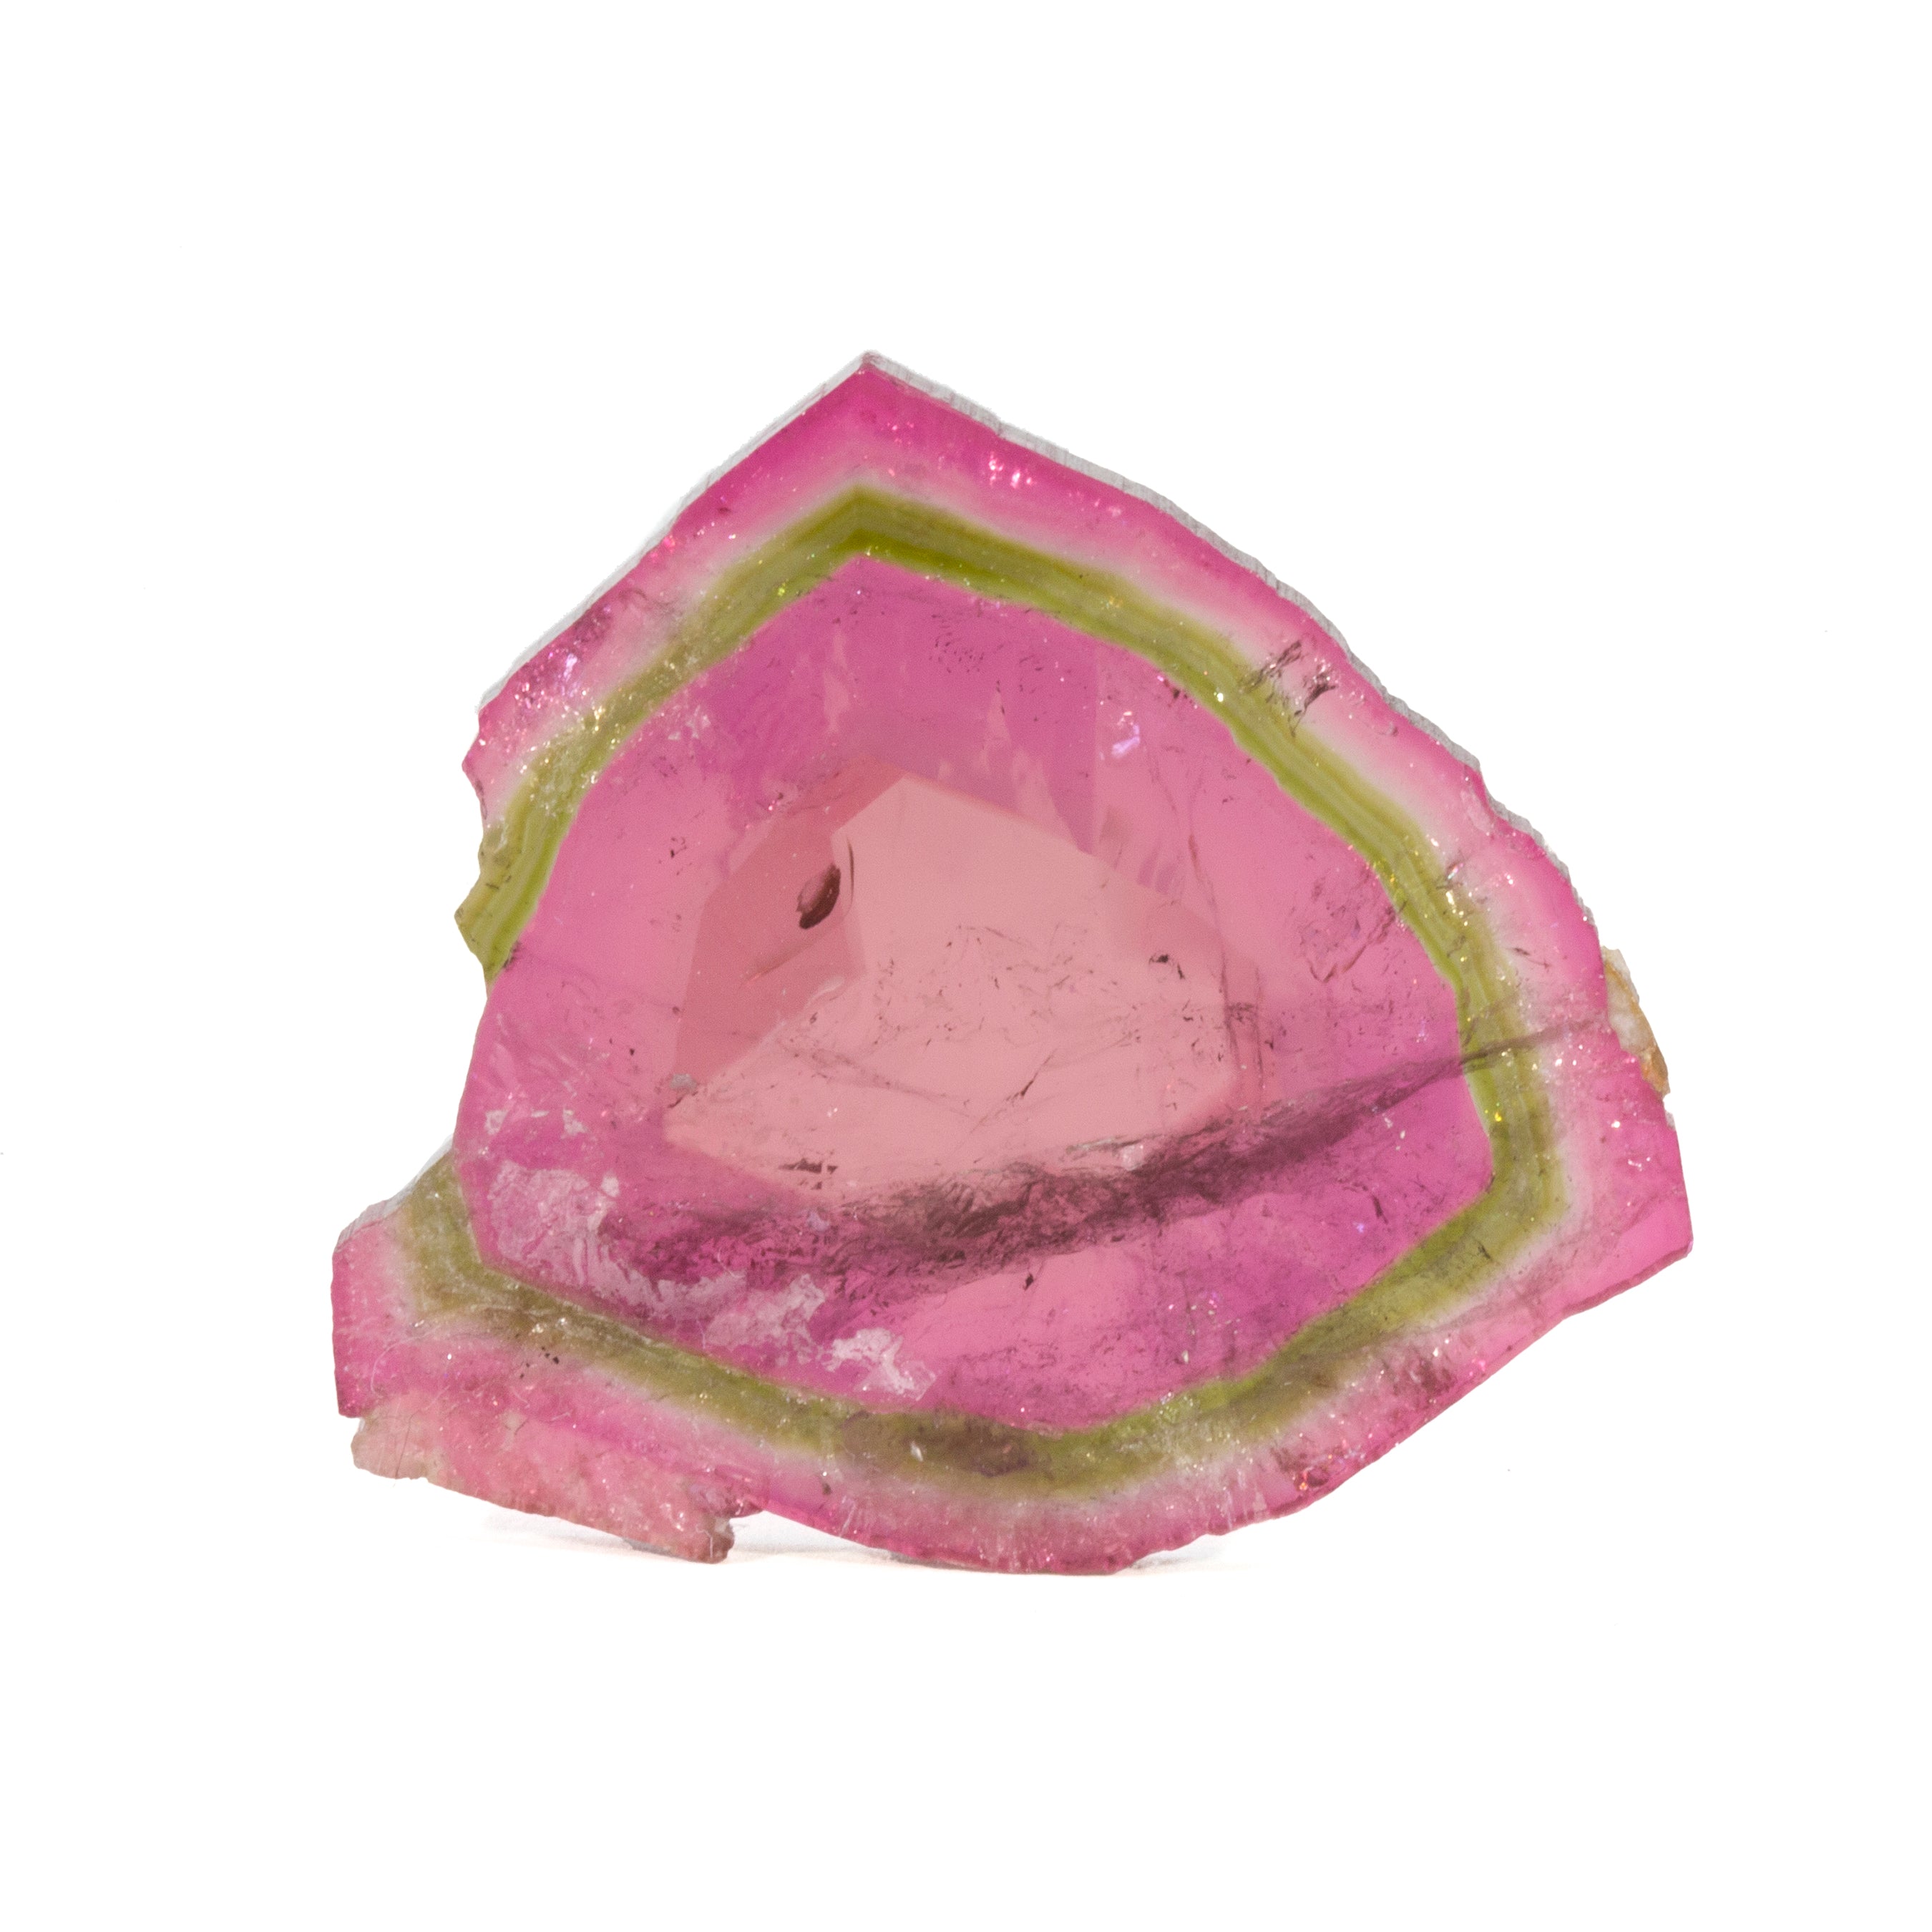 Watermelon Tourmaline 11.5 gram 1.63 inch Polished Crystal Slice - Brazil - GGX-078 - Crystalarium